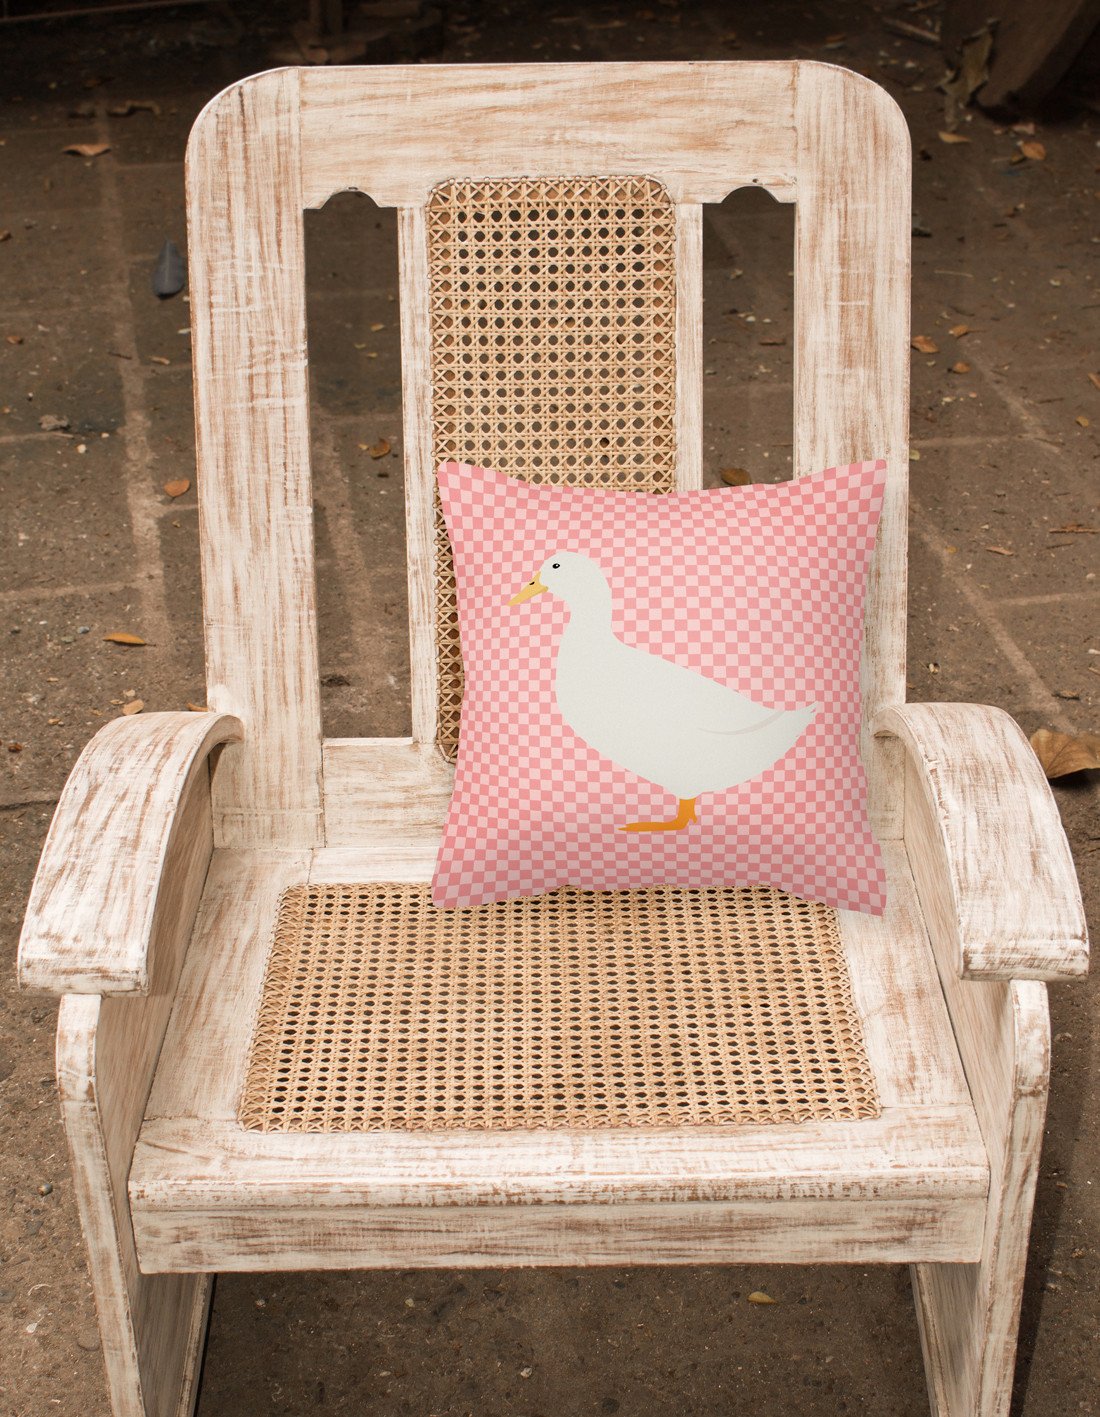 American Pekin Duck Pink Check Fabric Decorative Pillow BB7860PW1818 by Caroline's Treasures